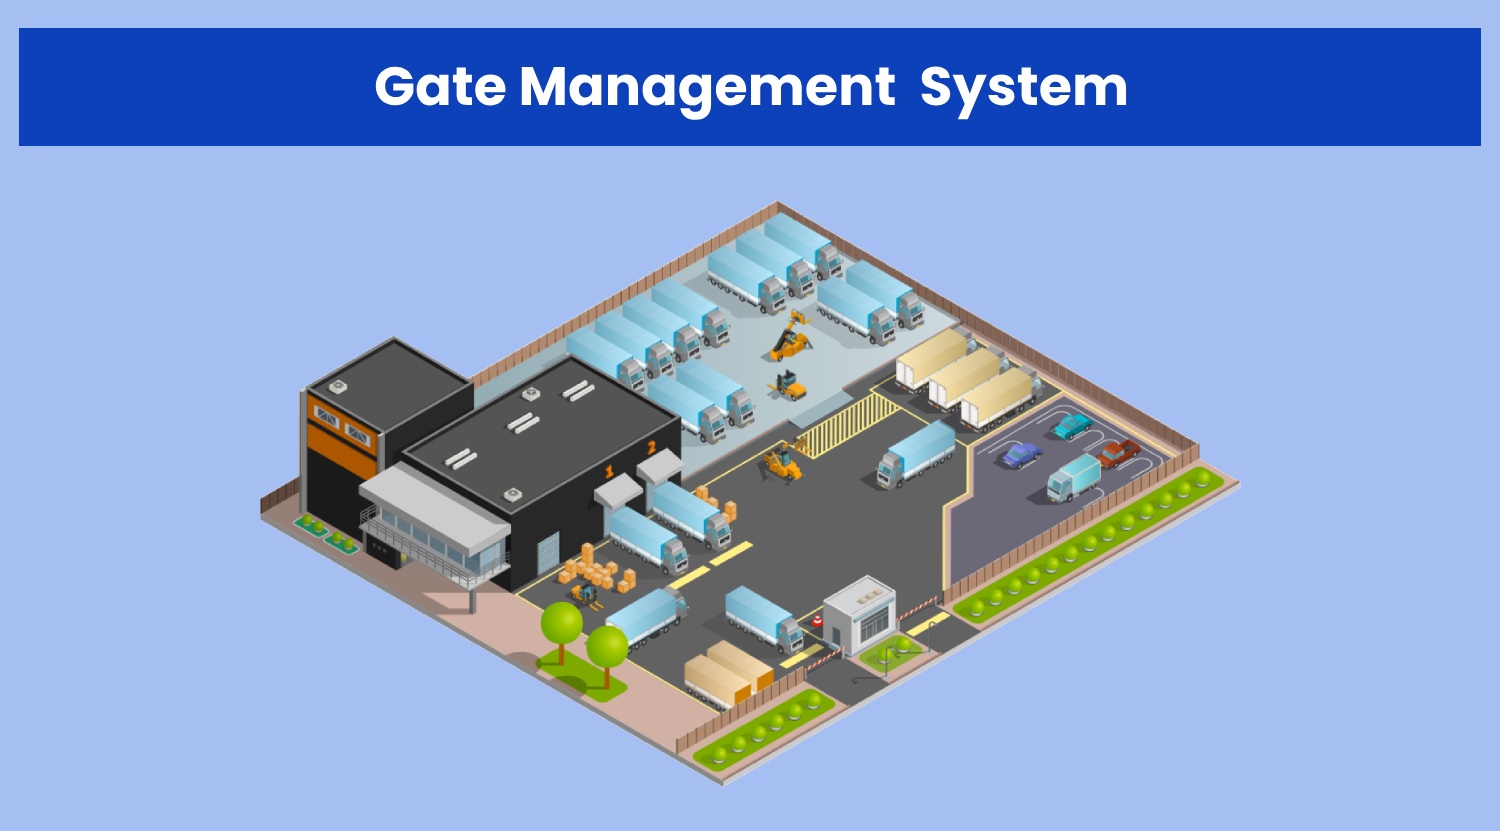 Gate management software